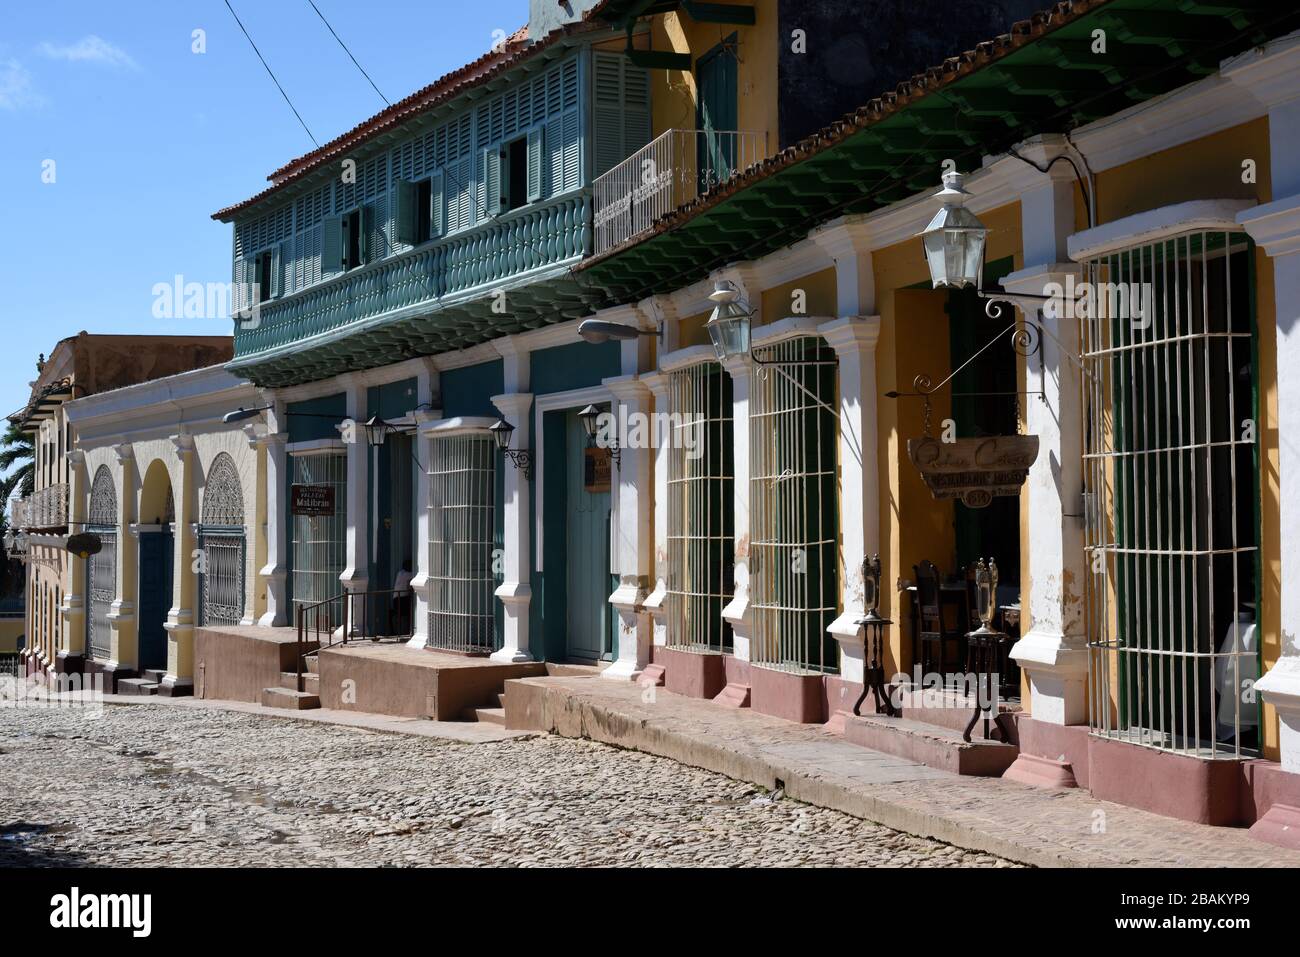 Houses, restaurants, trade, street, 2014, Cuba Stock Photo